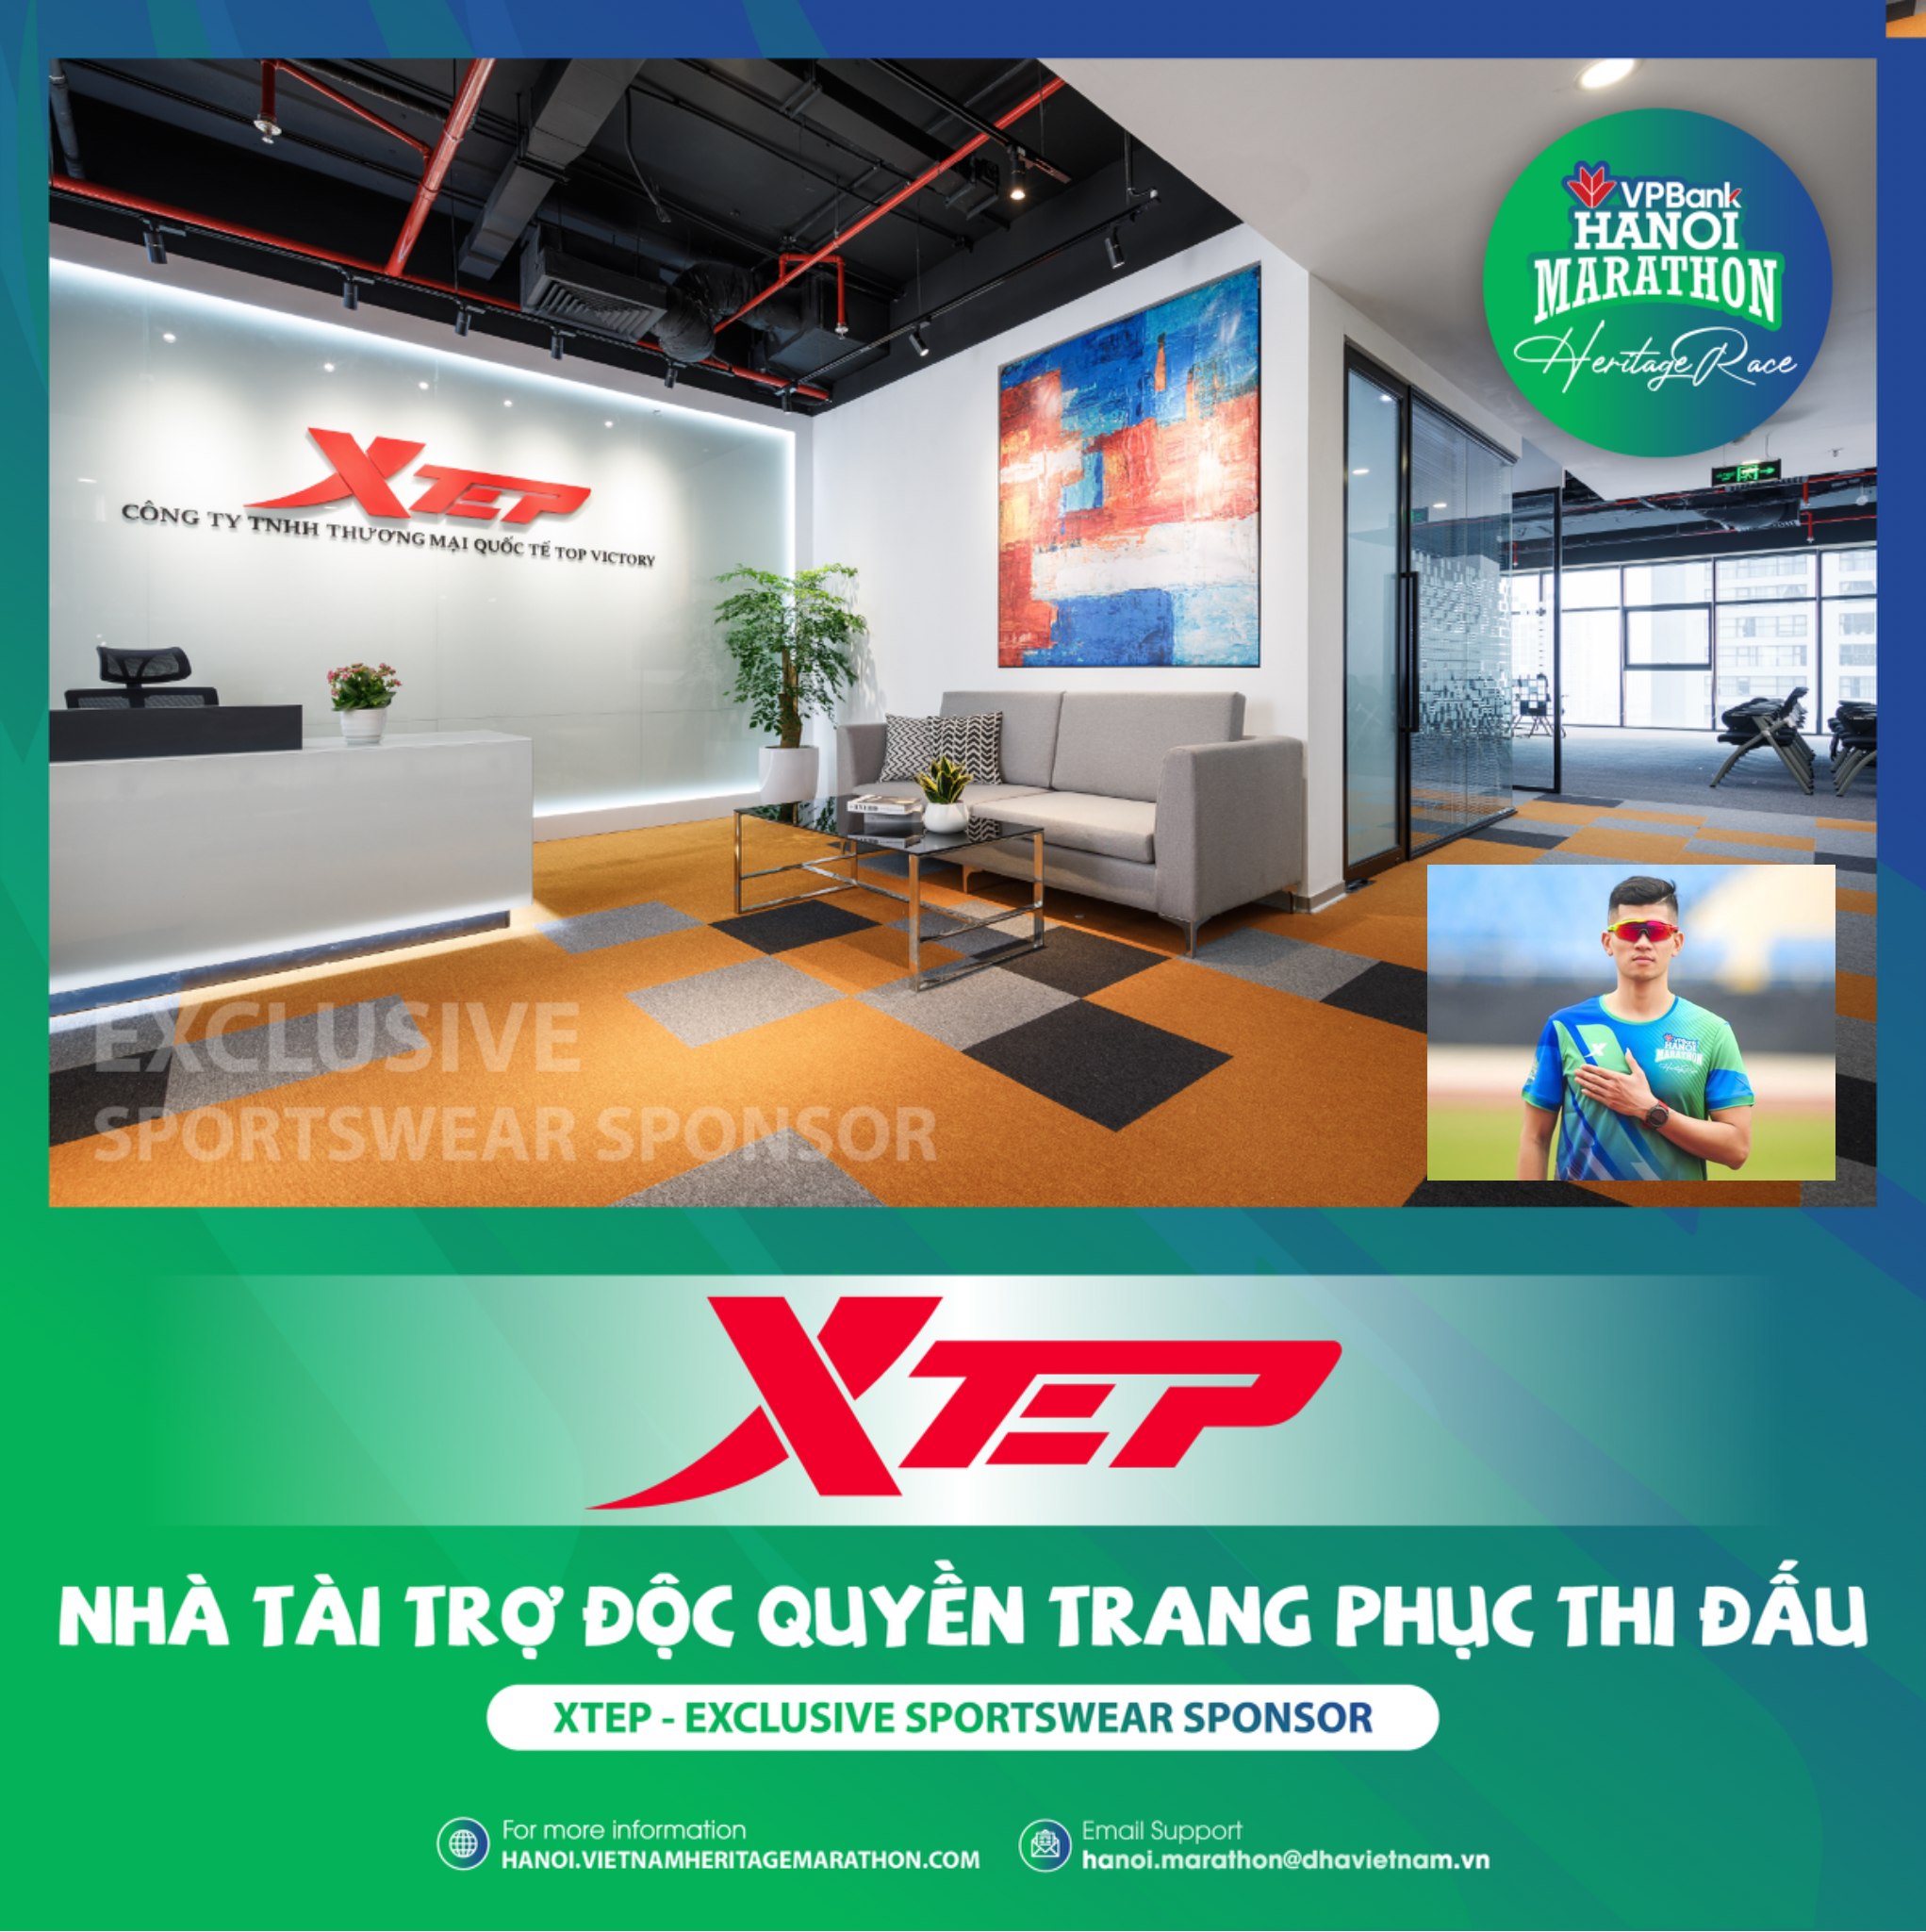 XTEP Further Accompanies VPBank Hanoi Marathon 2021